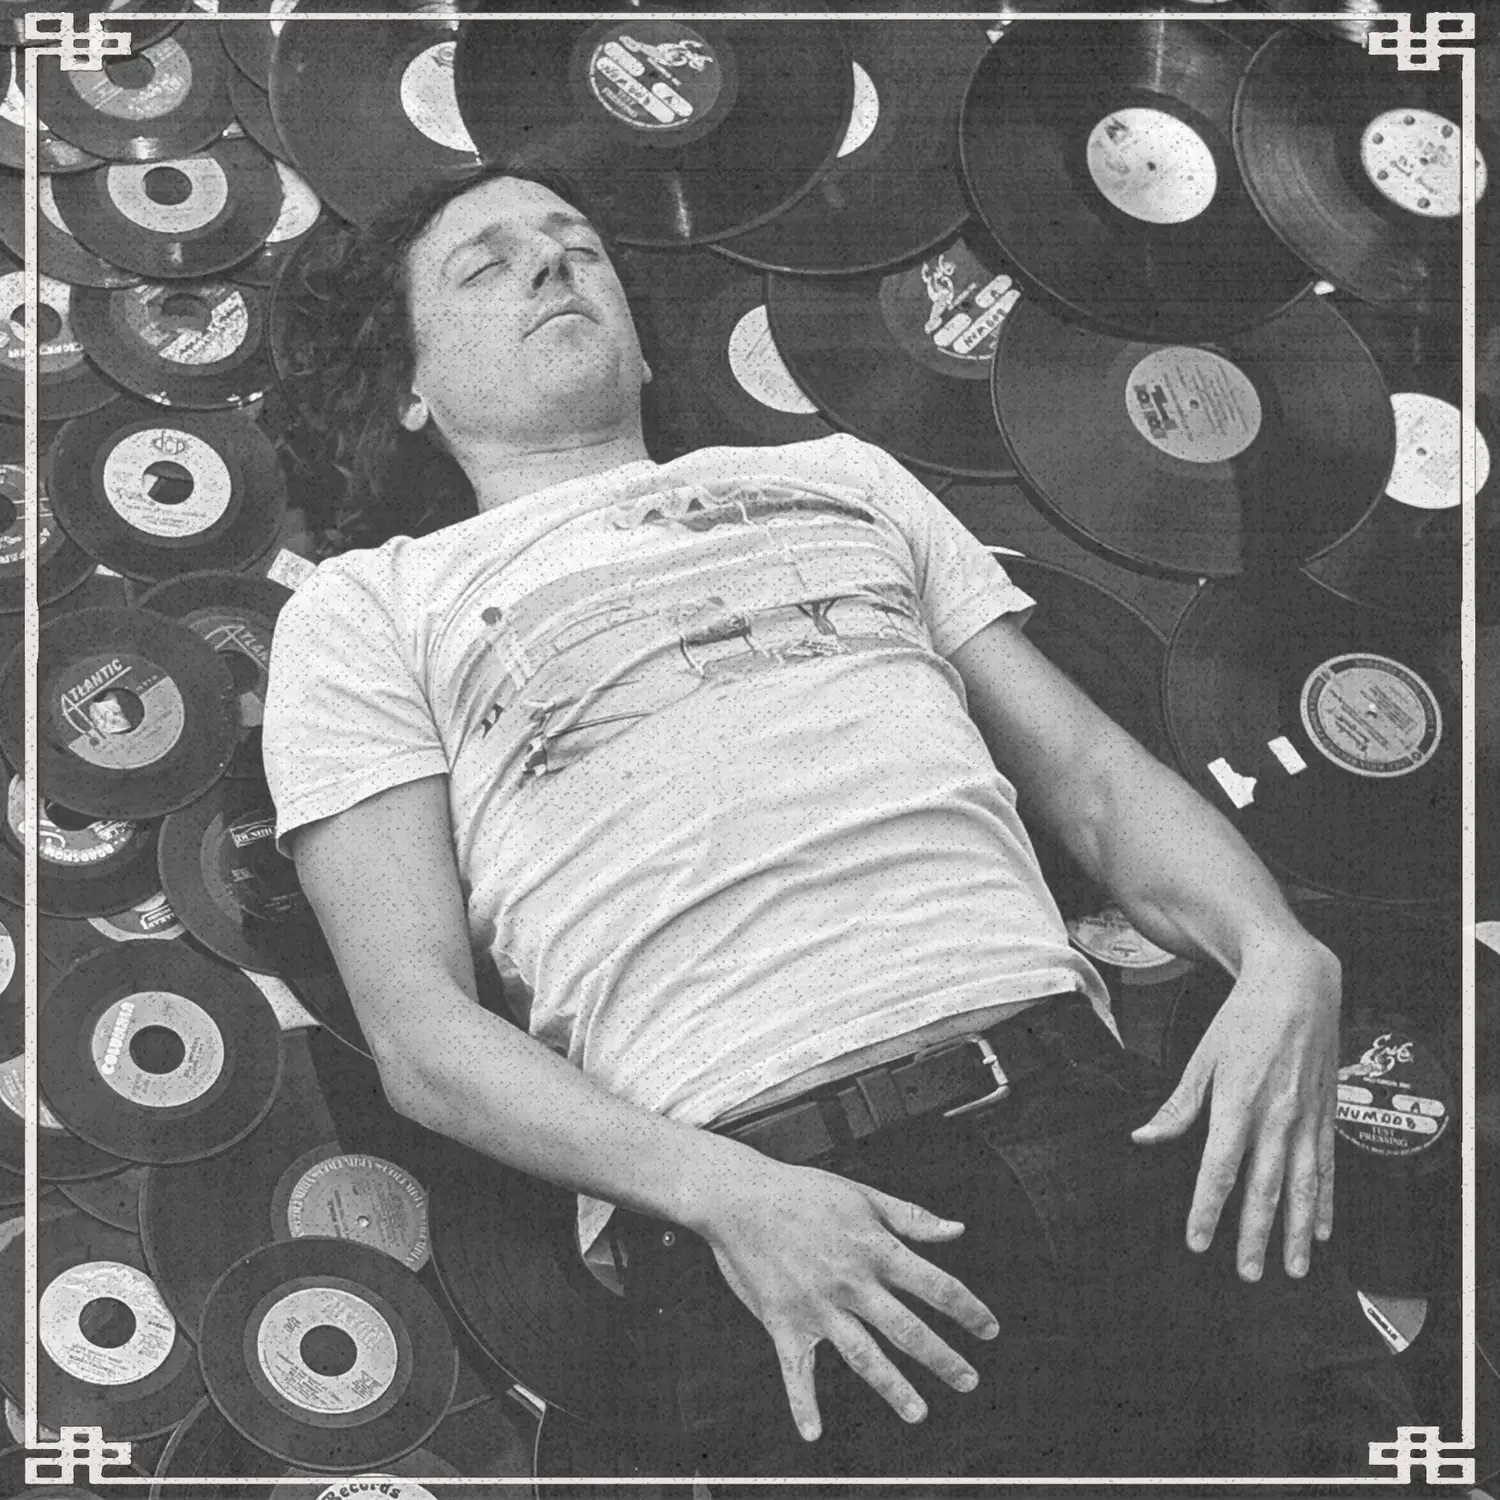 DJ Adam Lucky laying on vinyl records